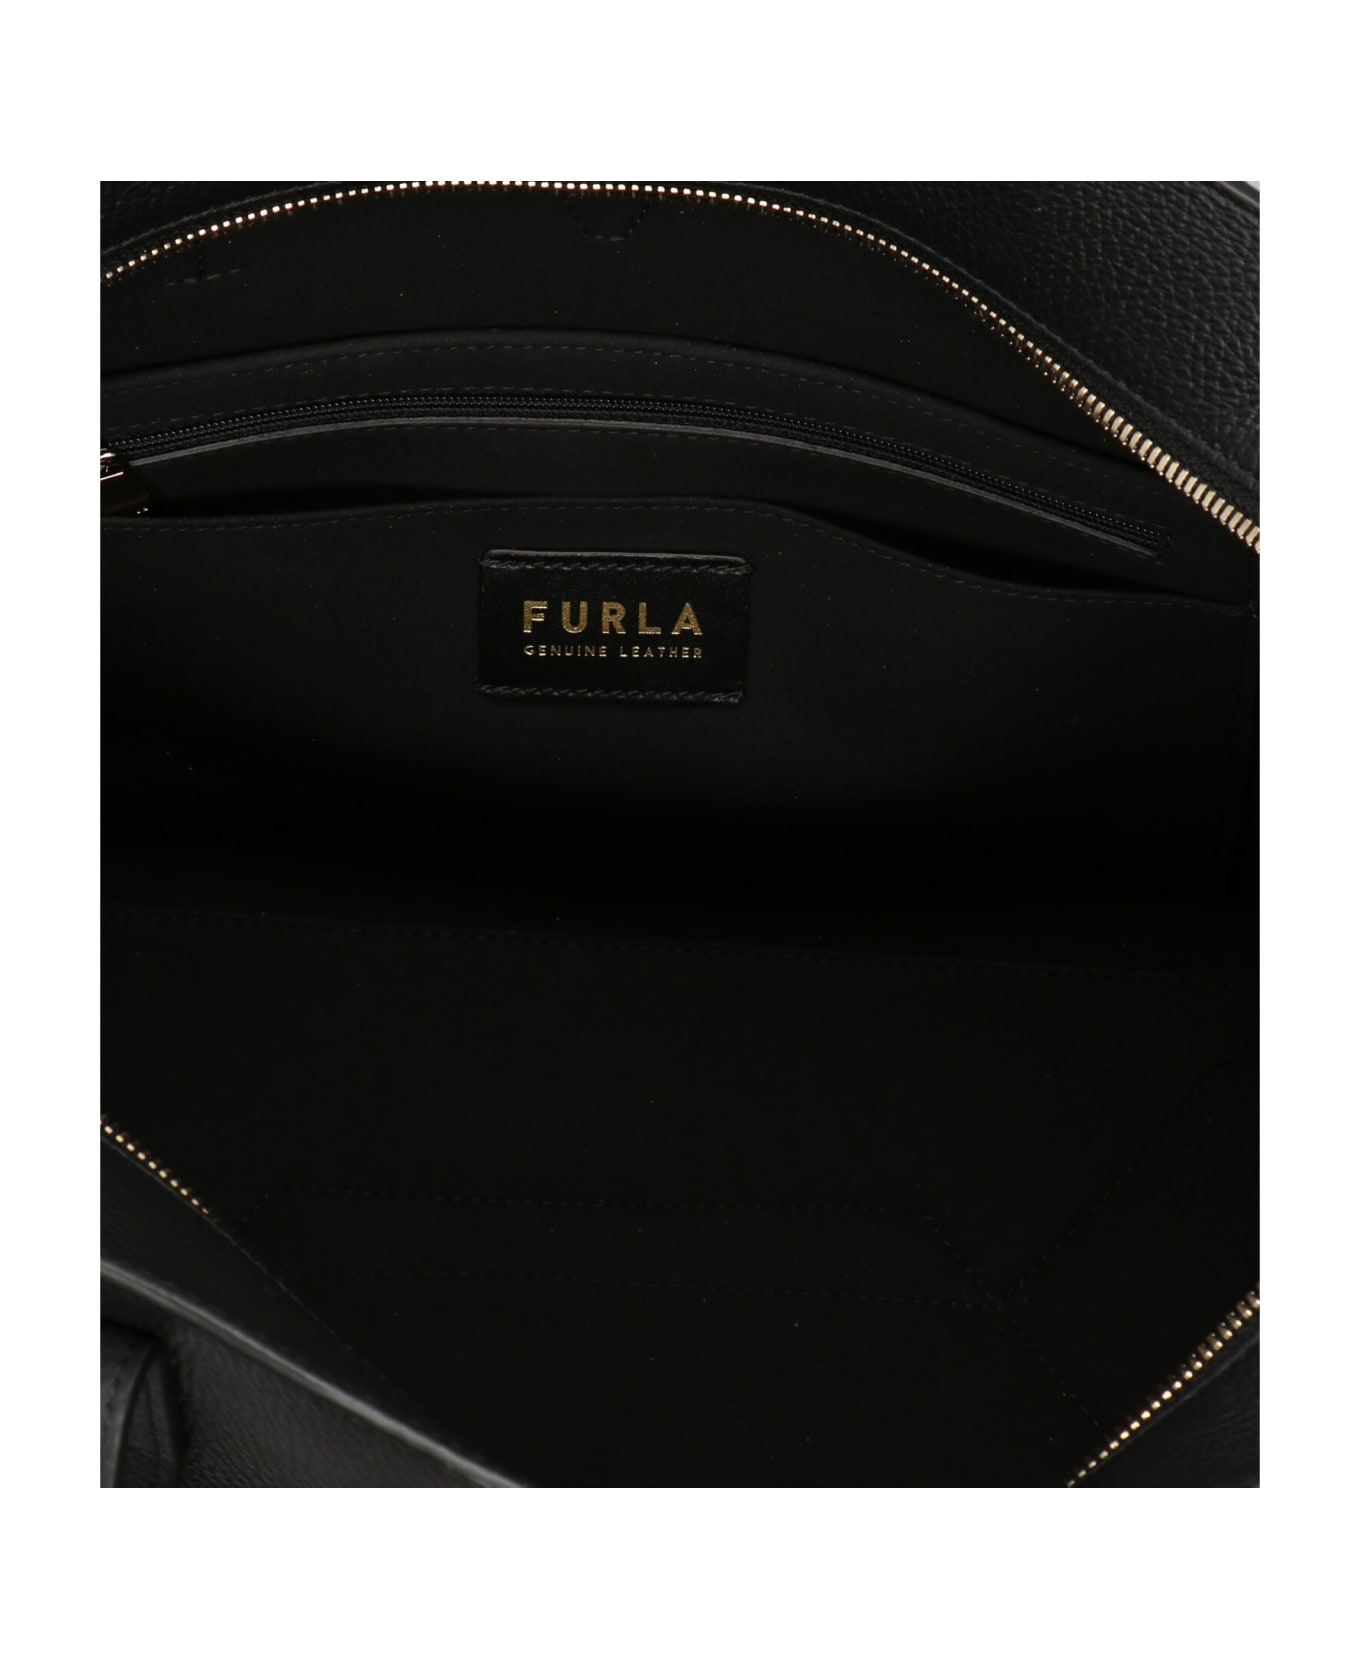 Furla Black Leather Net Large Tote Bag - Nero